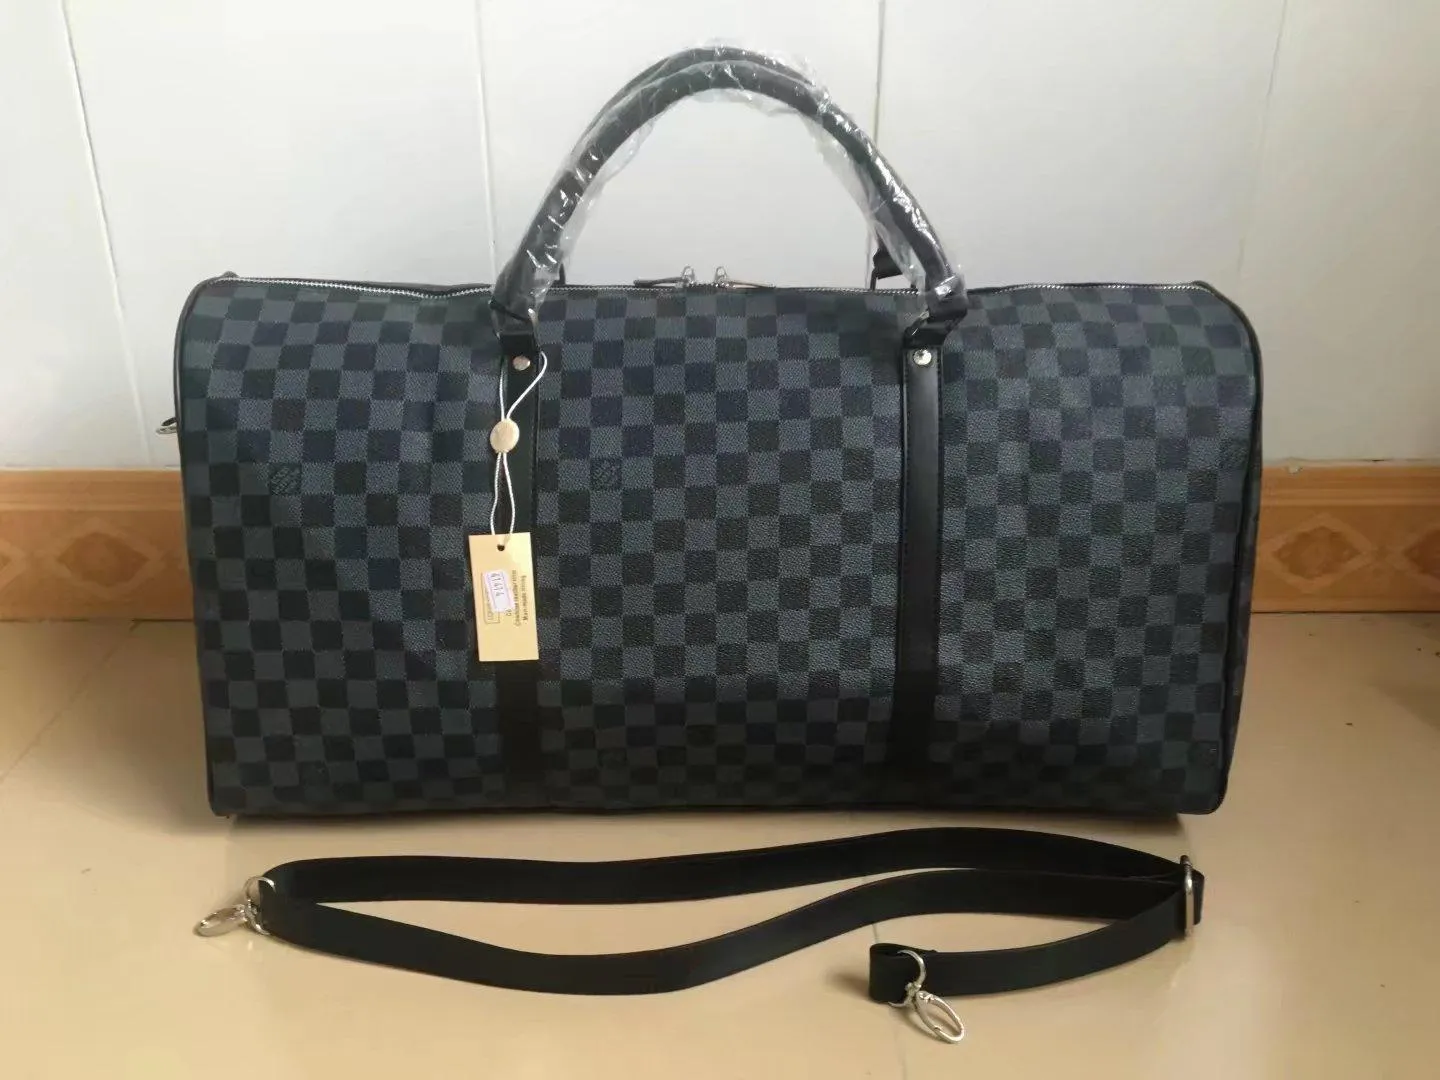 ABDLOUISVUITTON Handbags Men Luggage Bag Duffle Bag For Women  Shoulder Bag Tote Wallet Travel Bags KEEPALL 55 J45HJS From Wangtao8888,  $32.67